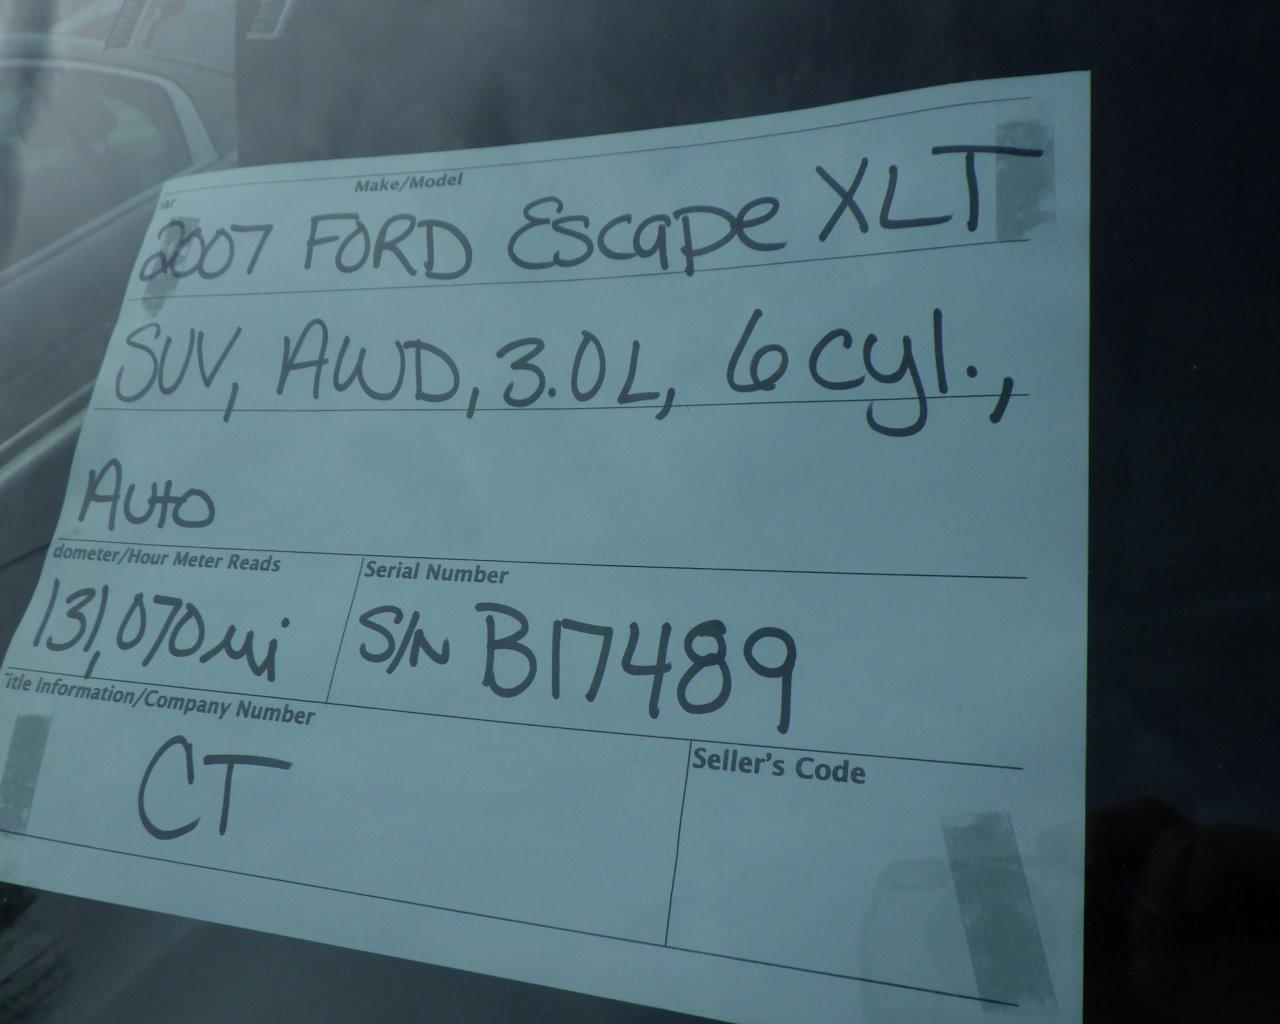 2016 FORD Escape XLT   V6   4x4 s/n:B17489